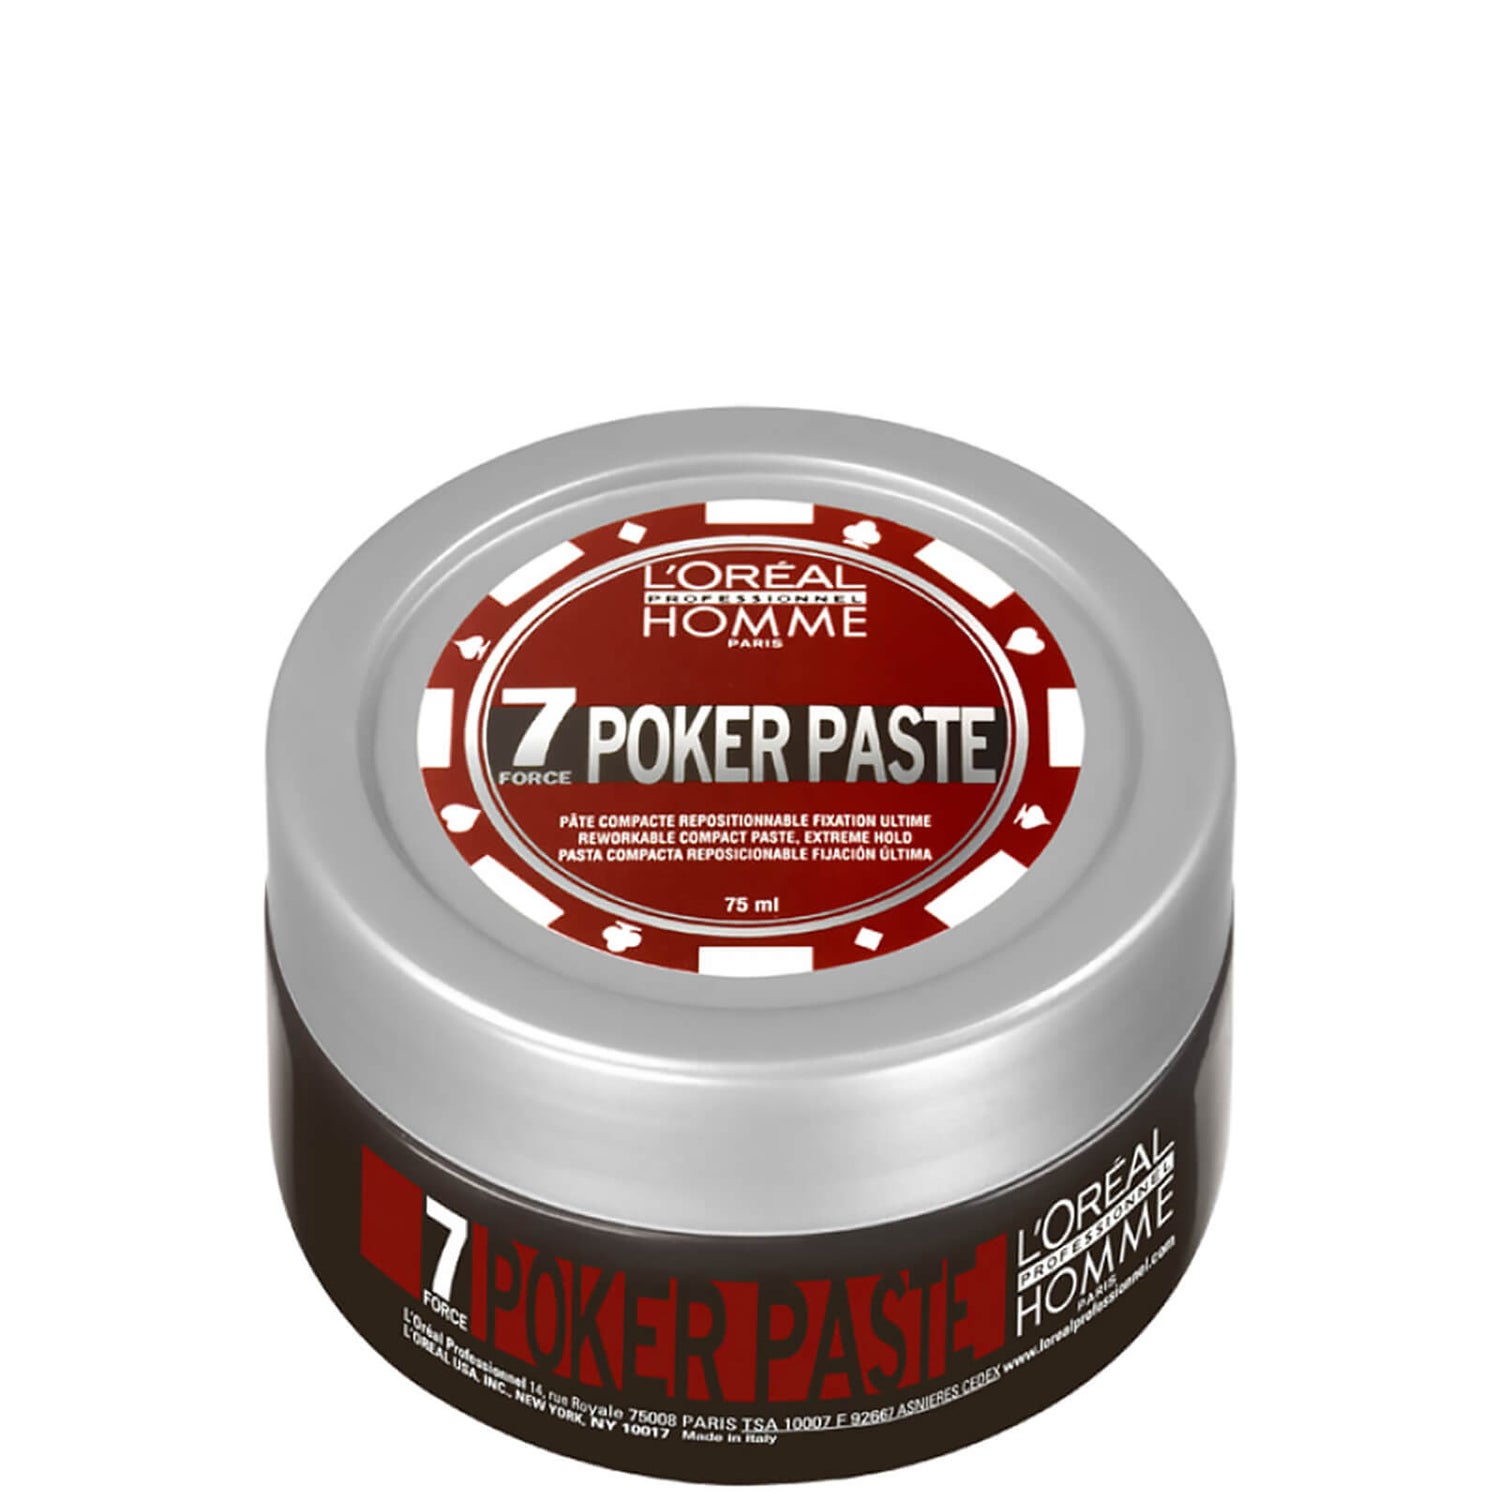 L'Oreal Professional Homme Poker Paste (75 ml)